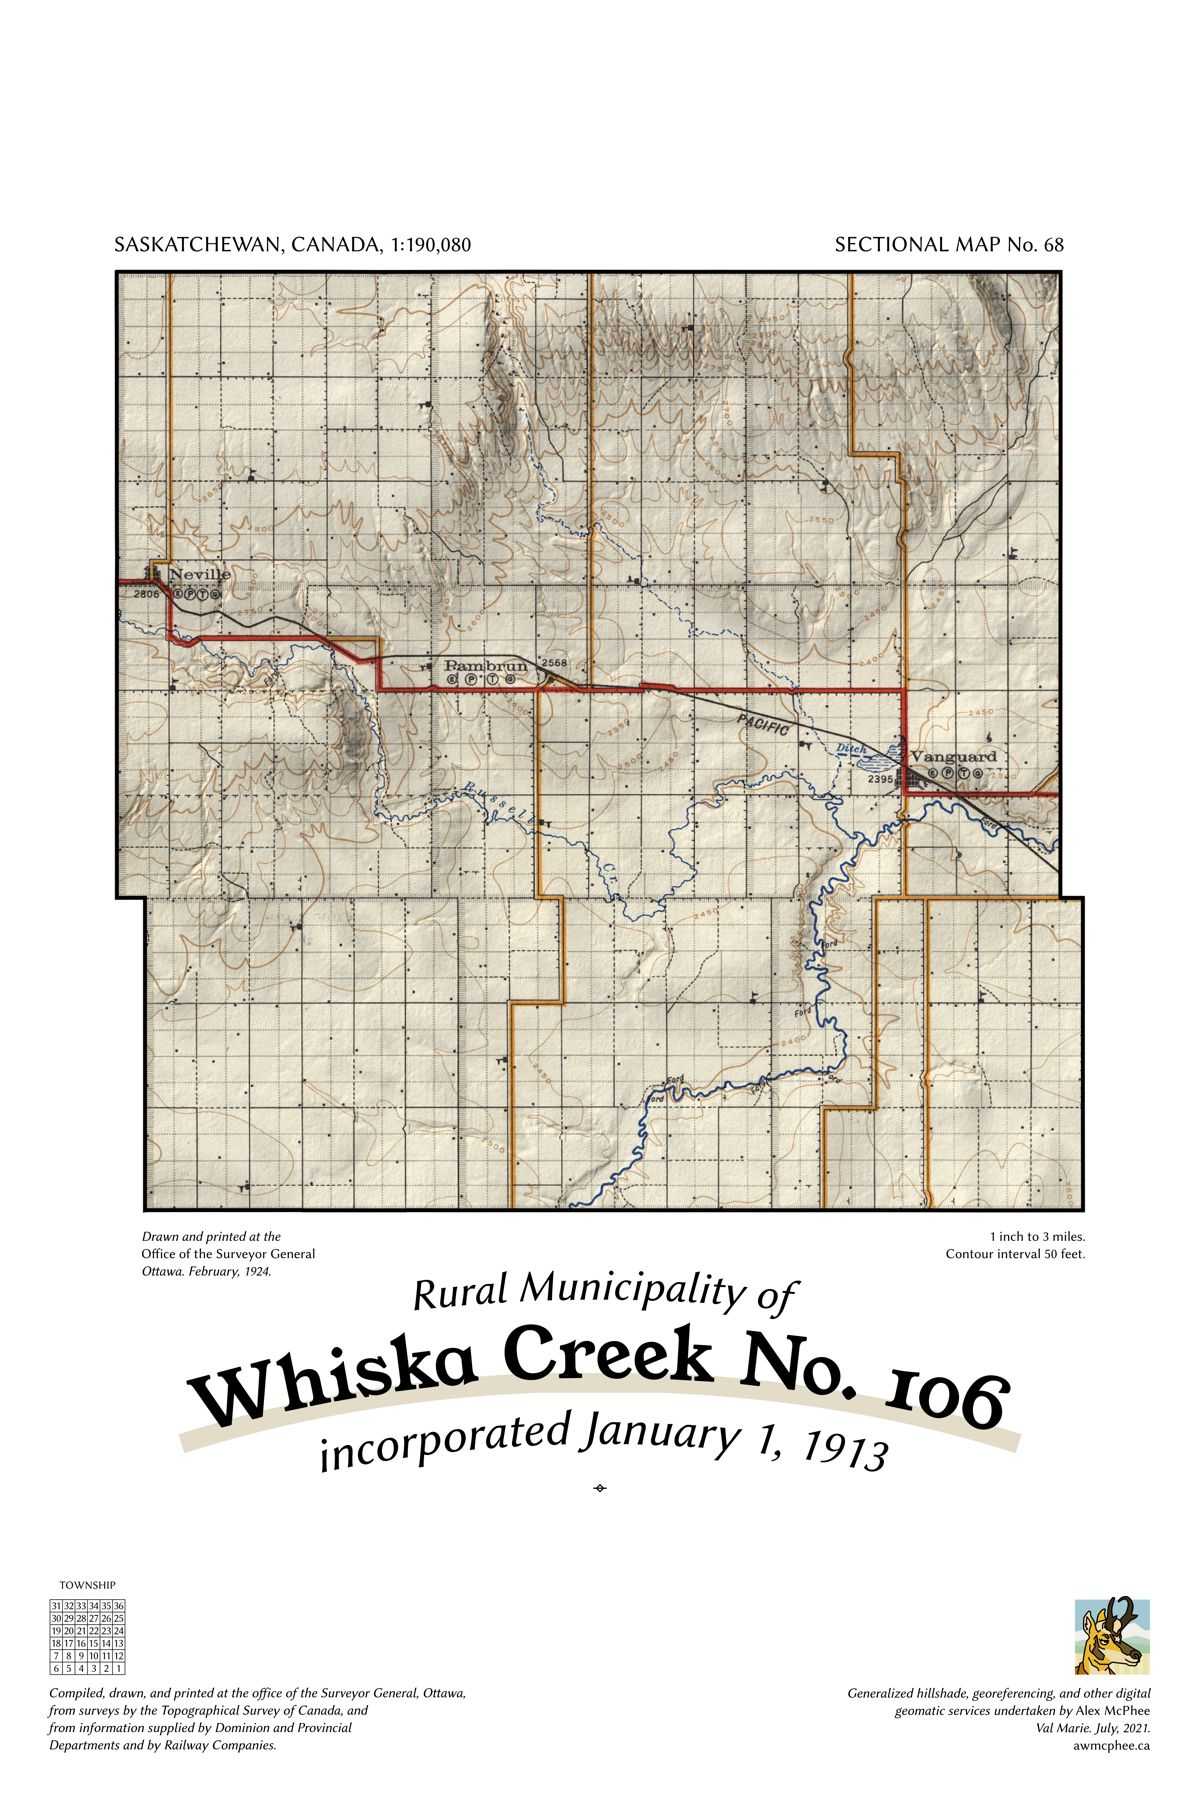 A map of the Rural Municipality of Whiska Creek No. 106.